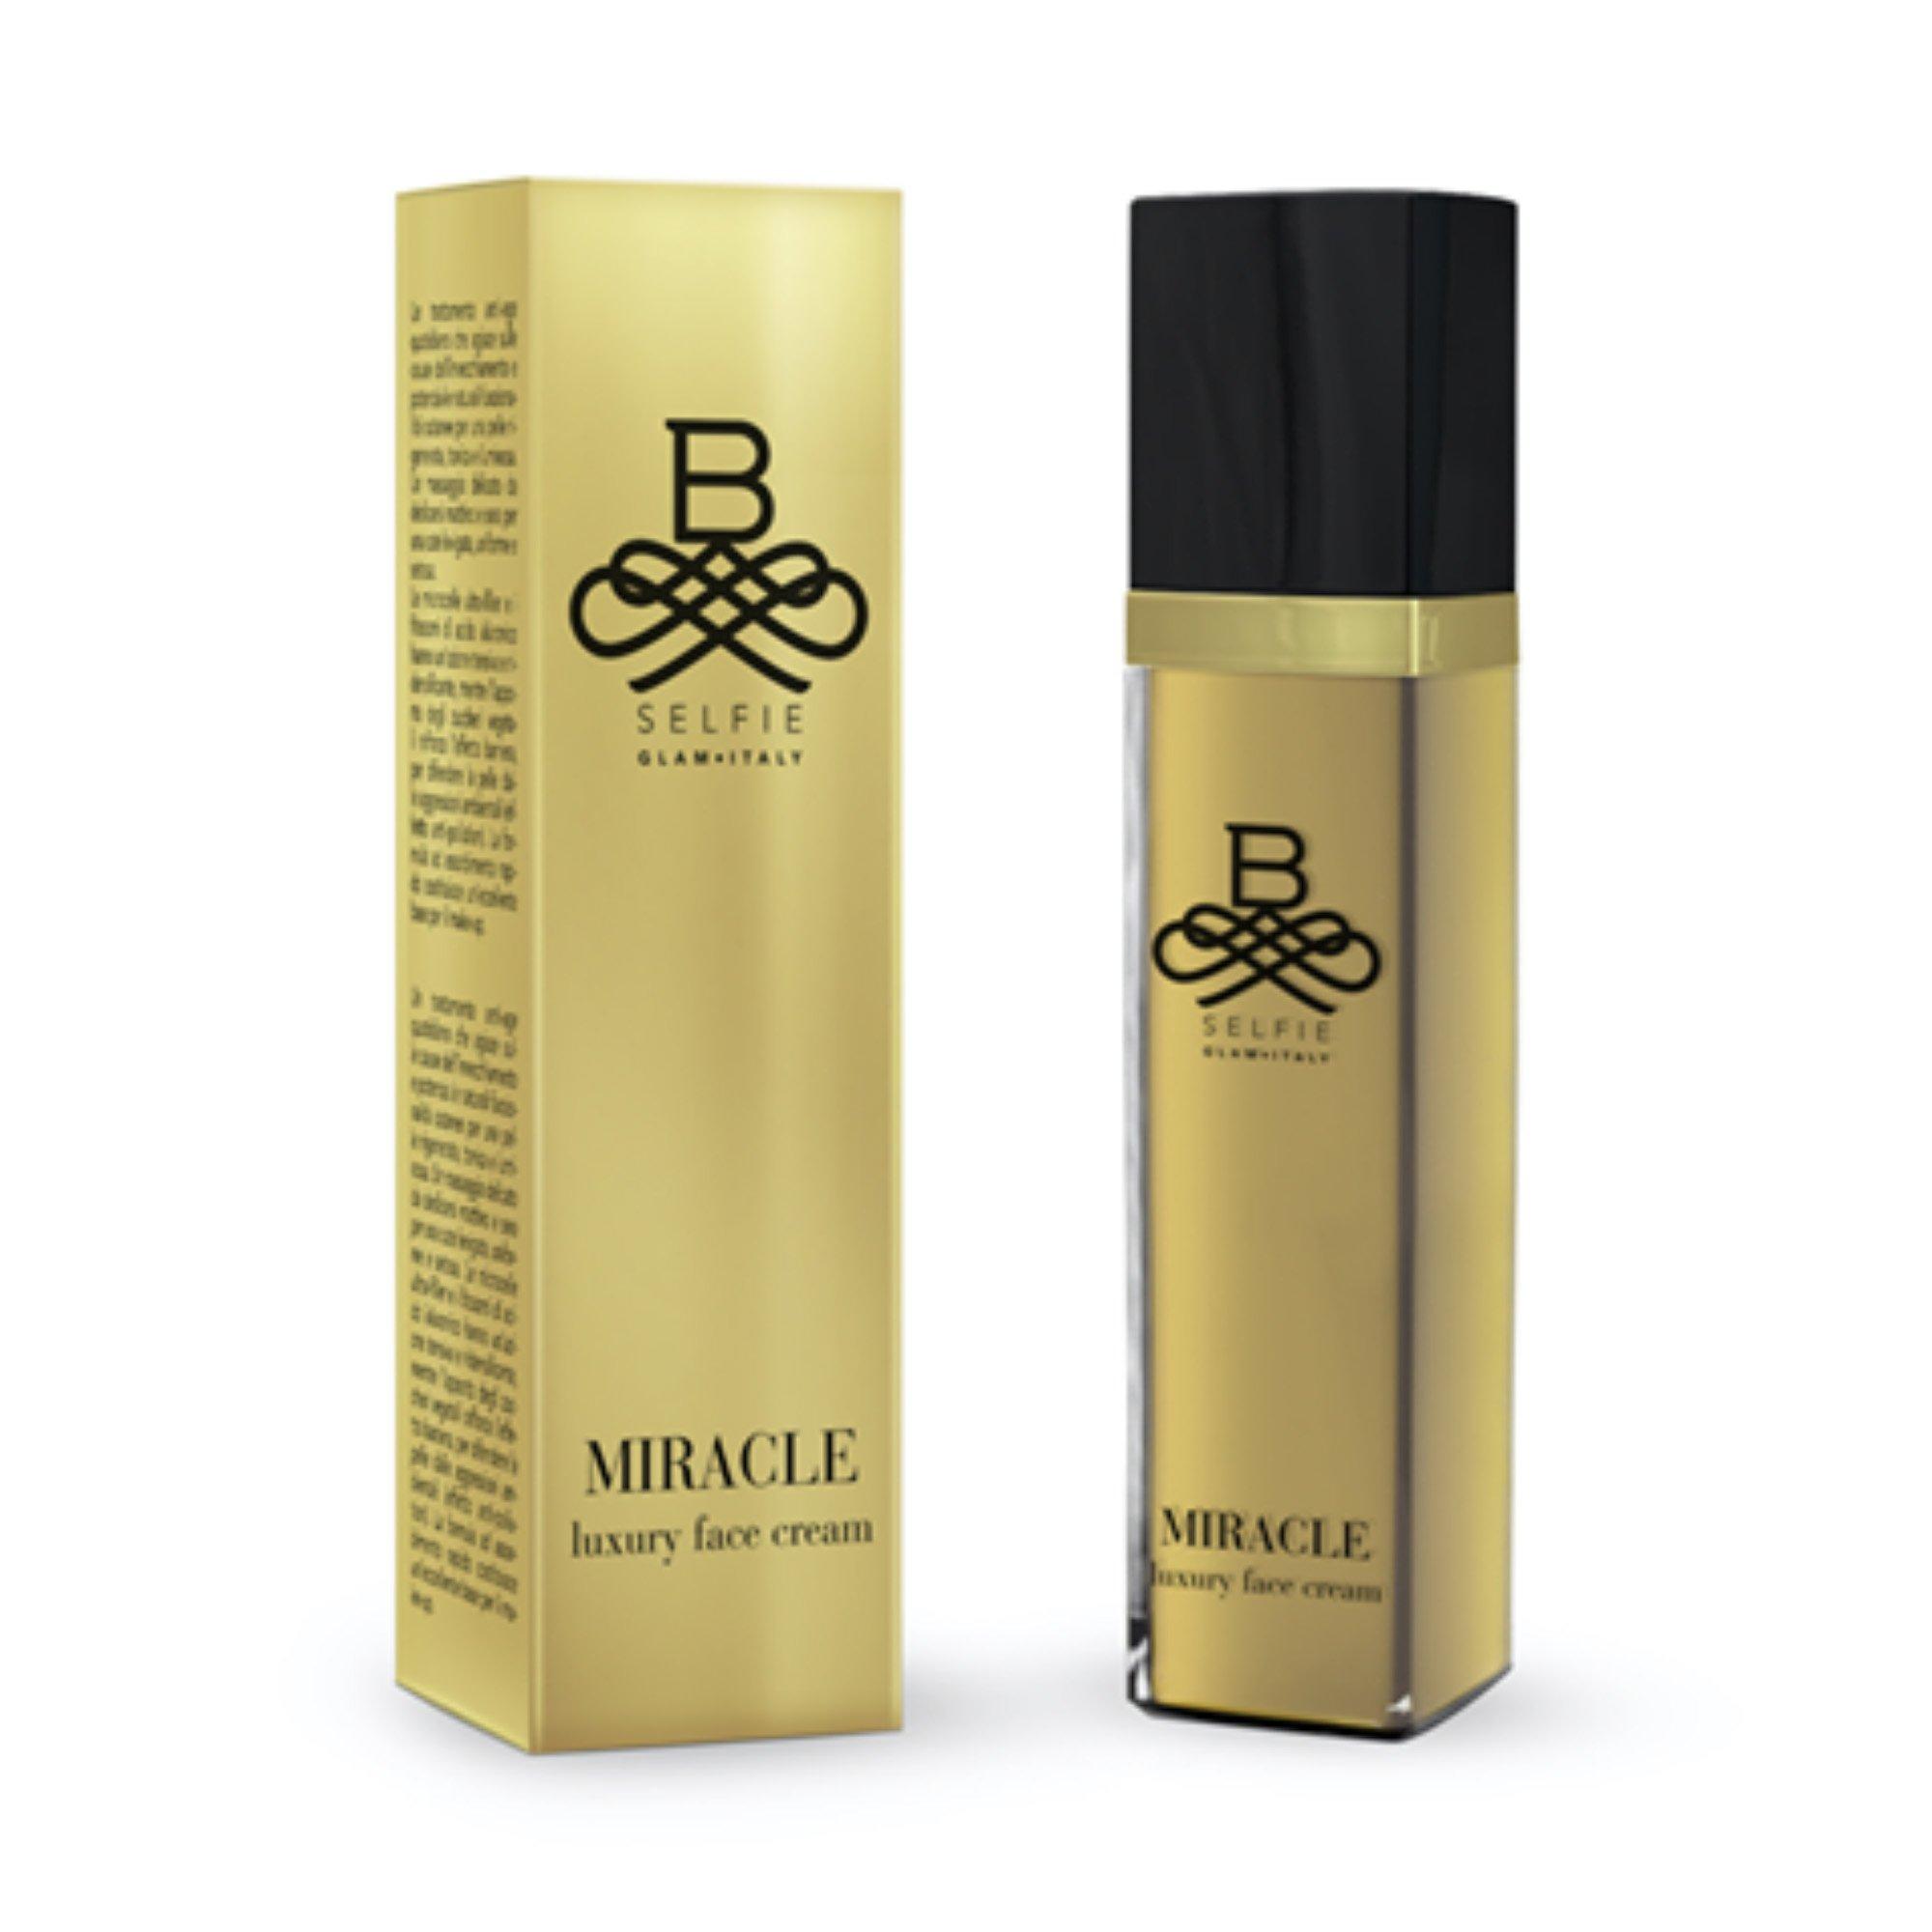 Image of B-SELFIE B-SELFIE MIRACLE FACE CREAM Miracle Luxury Face Cream - 50ml